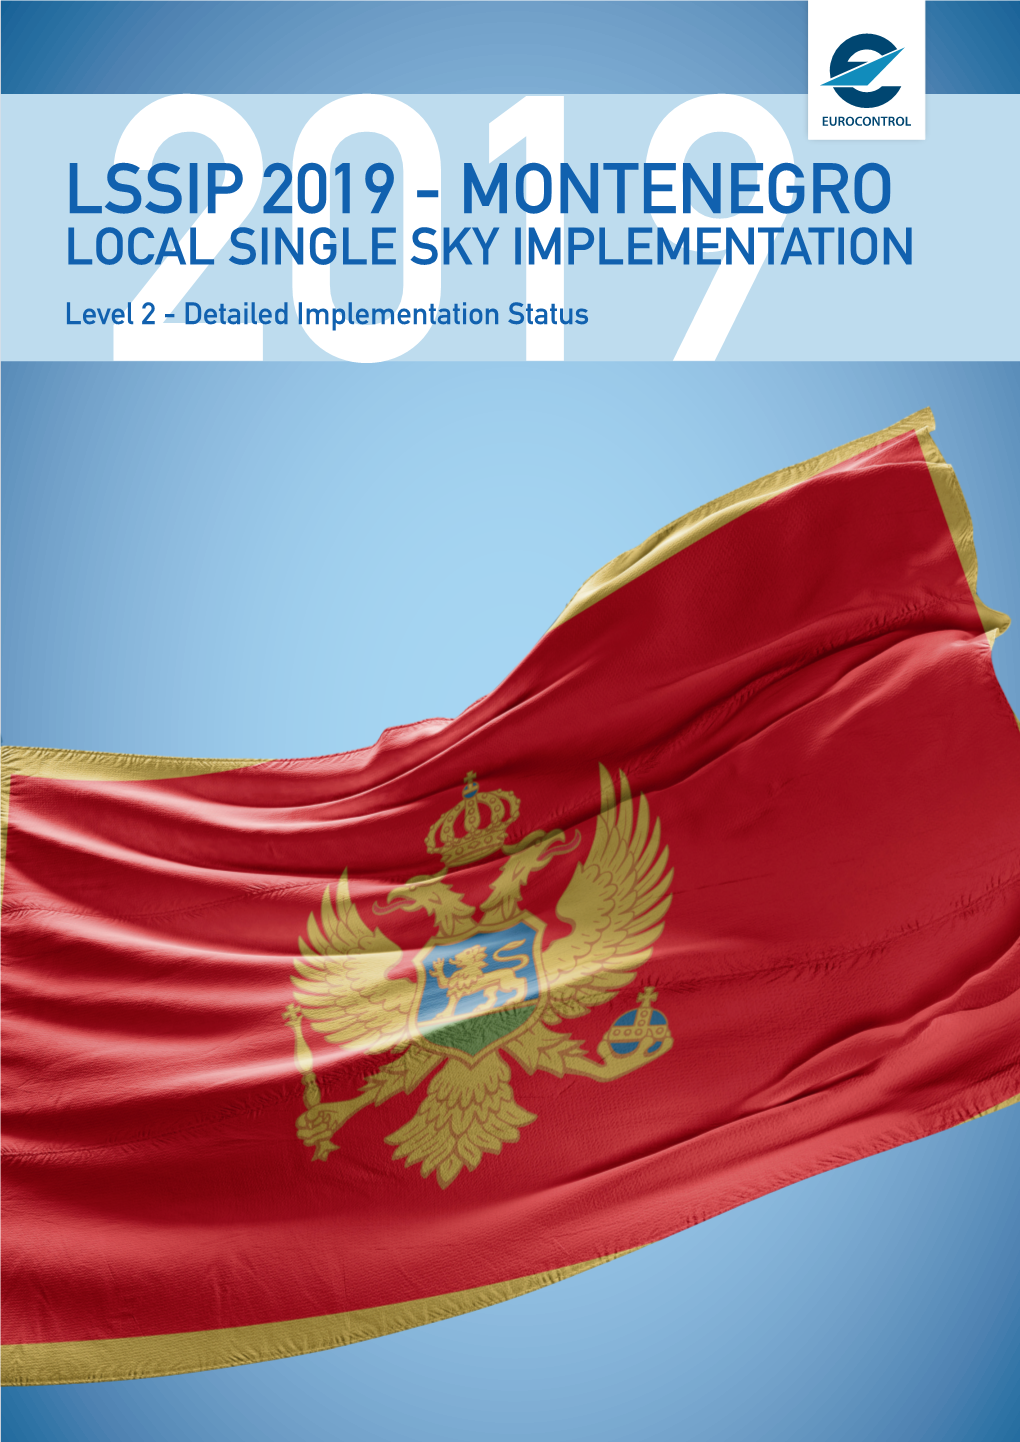 MONTENEGRO LOCAL SINGLE SKY IMPLEMENTATION Level2019 2 - Detailed Implementation Status